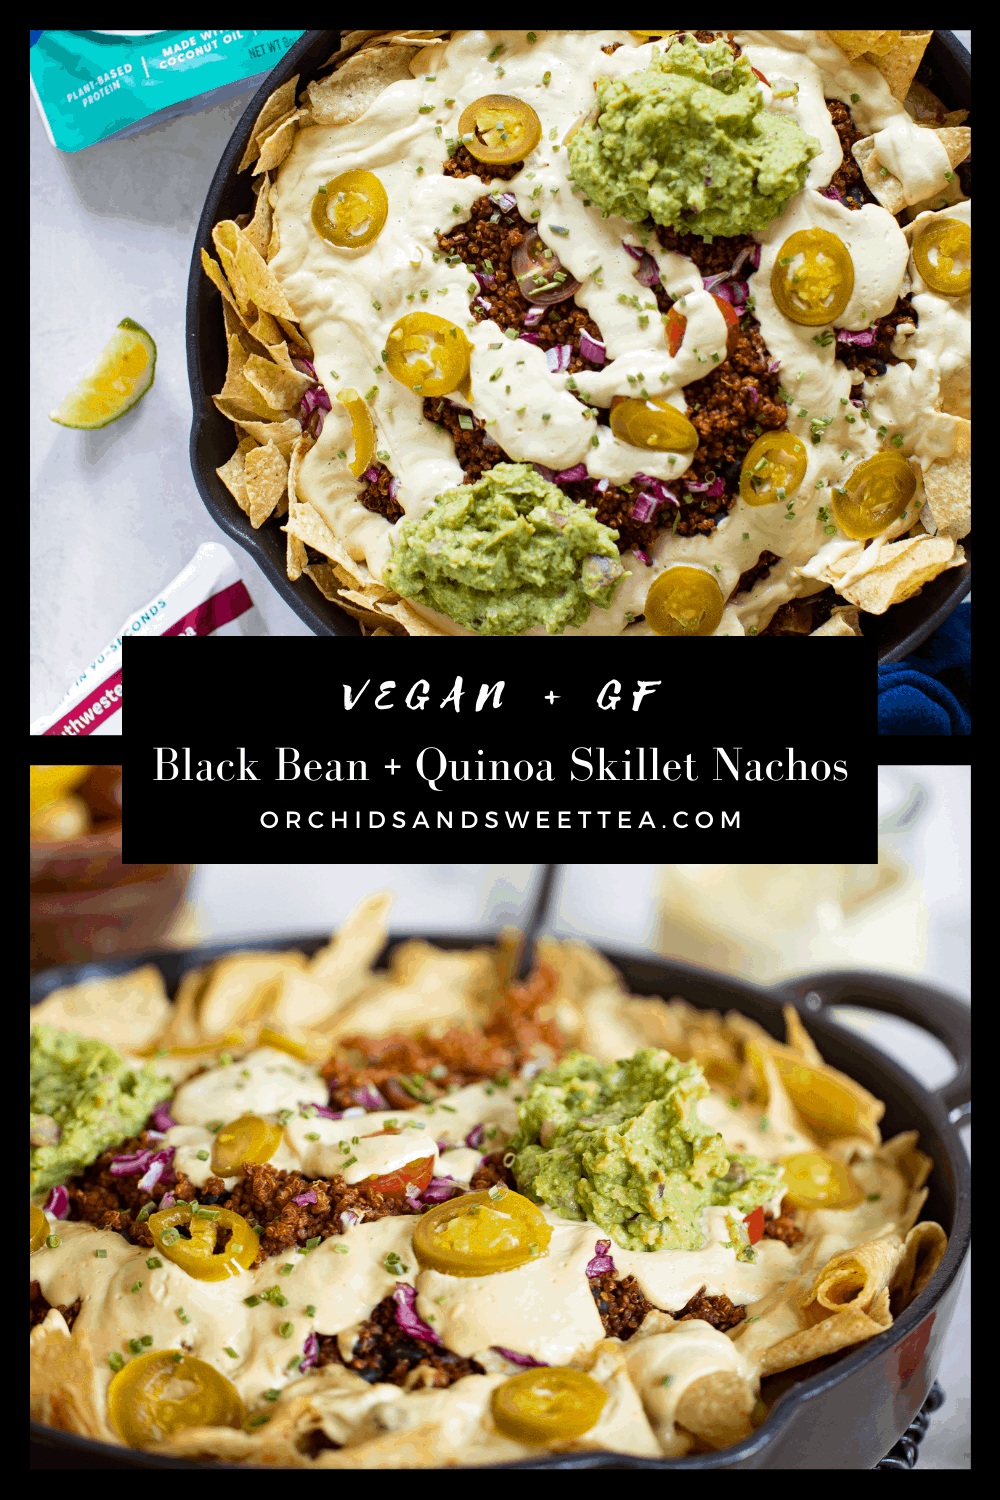 Black Bean + Quinoa Skillet Nachos